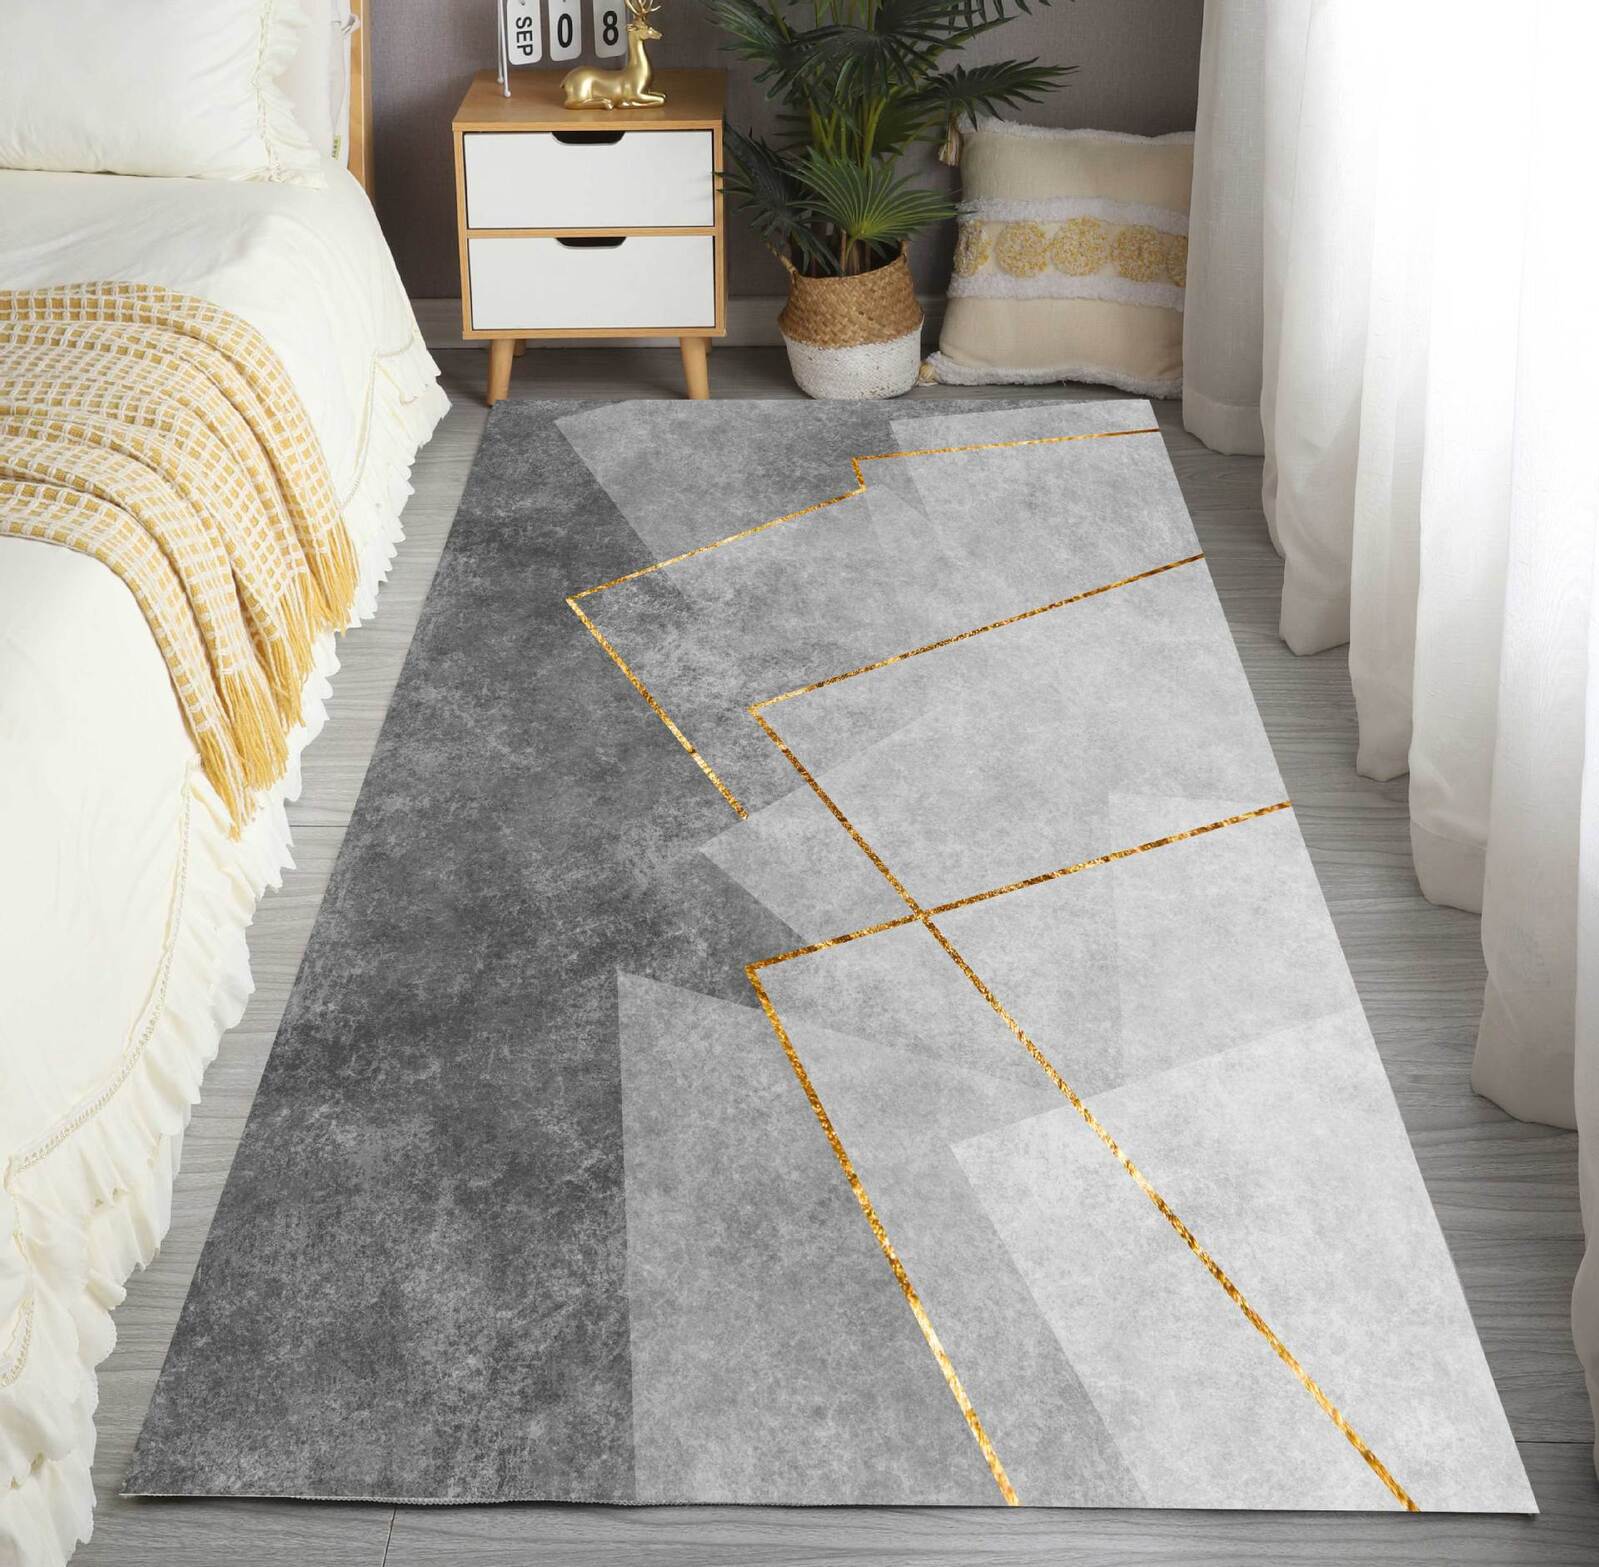 Grandeur Hallway/Bedroom Runner Area Rug Carpet Mat (80 x 200)